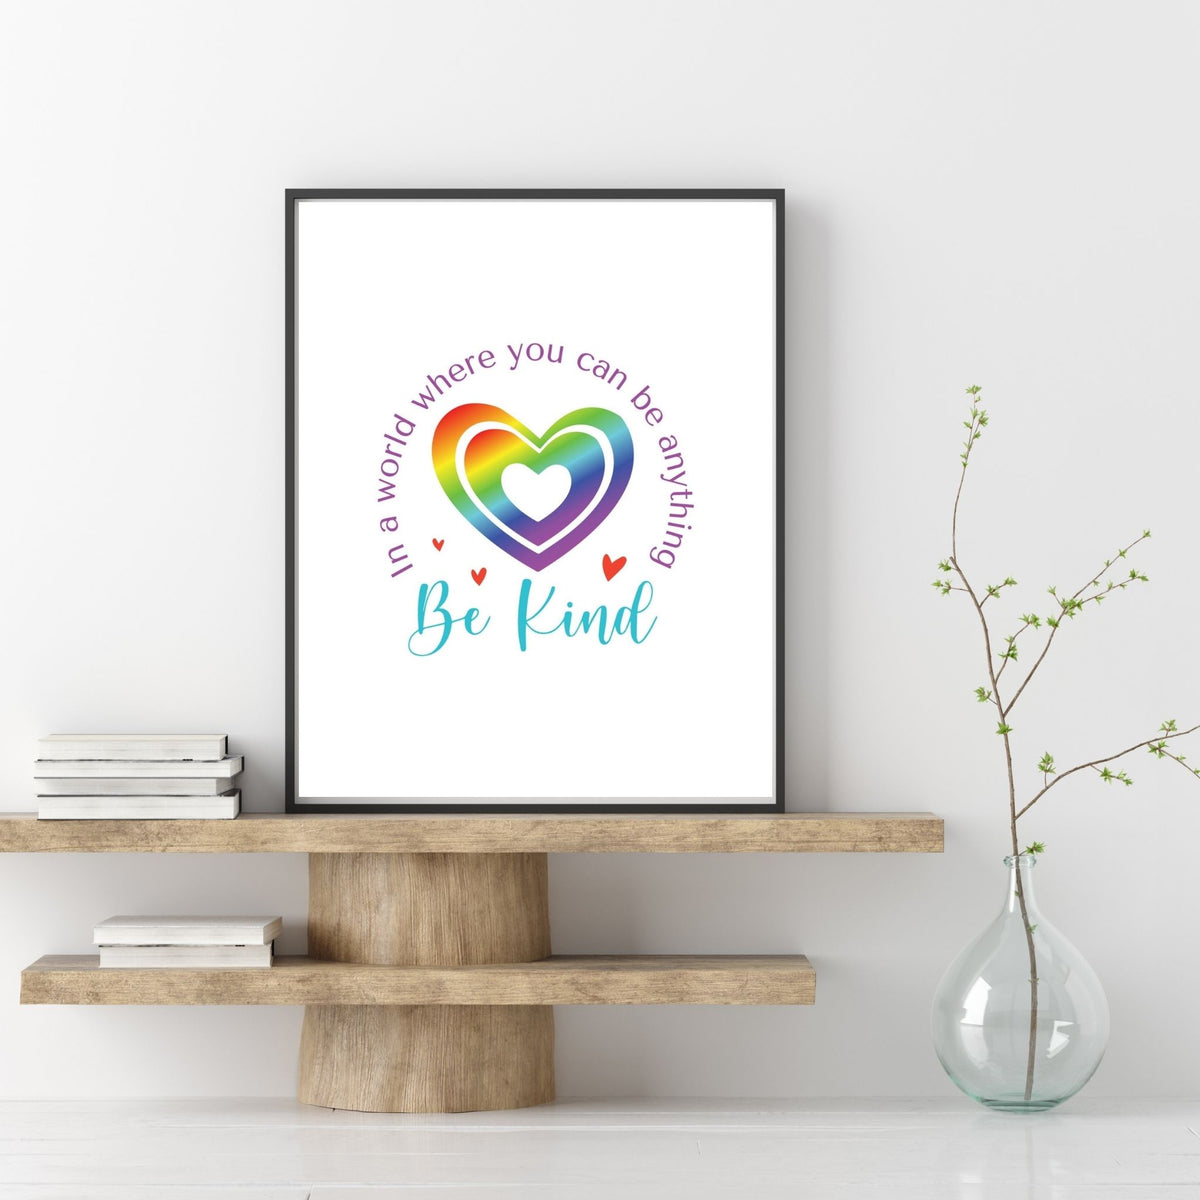 Be Kind (Digital Print)